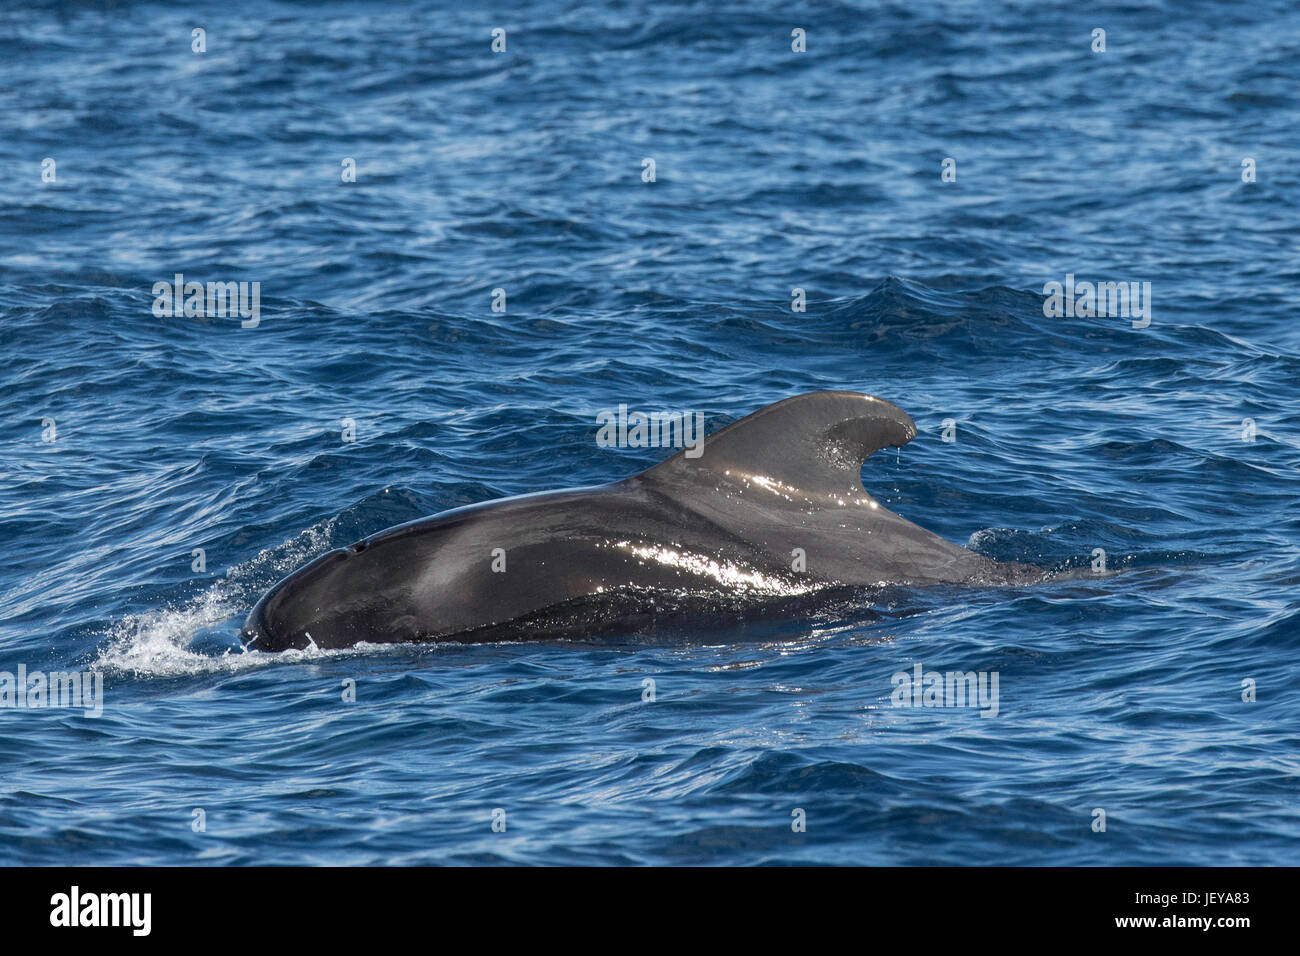 Short-finned pilot whale, Globicephala macrorhynchus, surfacing, showing dorsal fin, Island of Madeira, North Atlantic Ocean Stock Photo